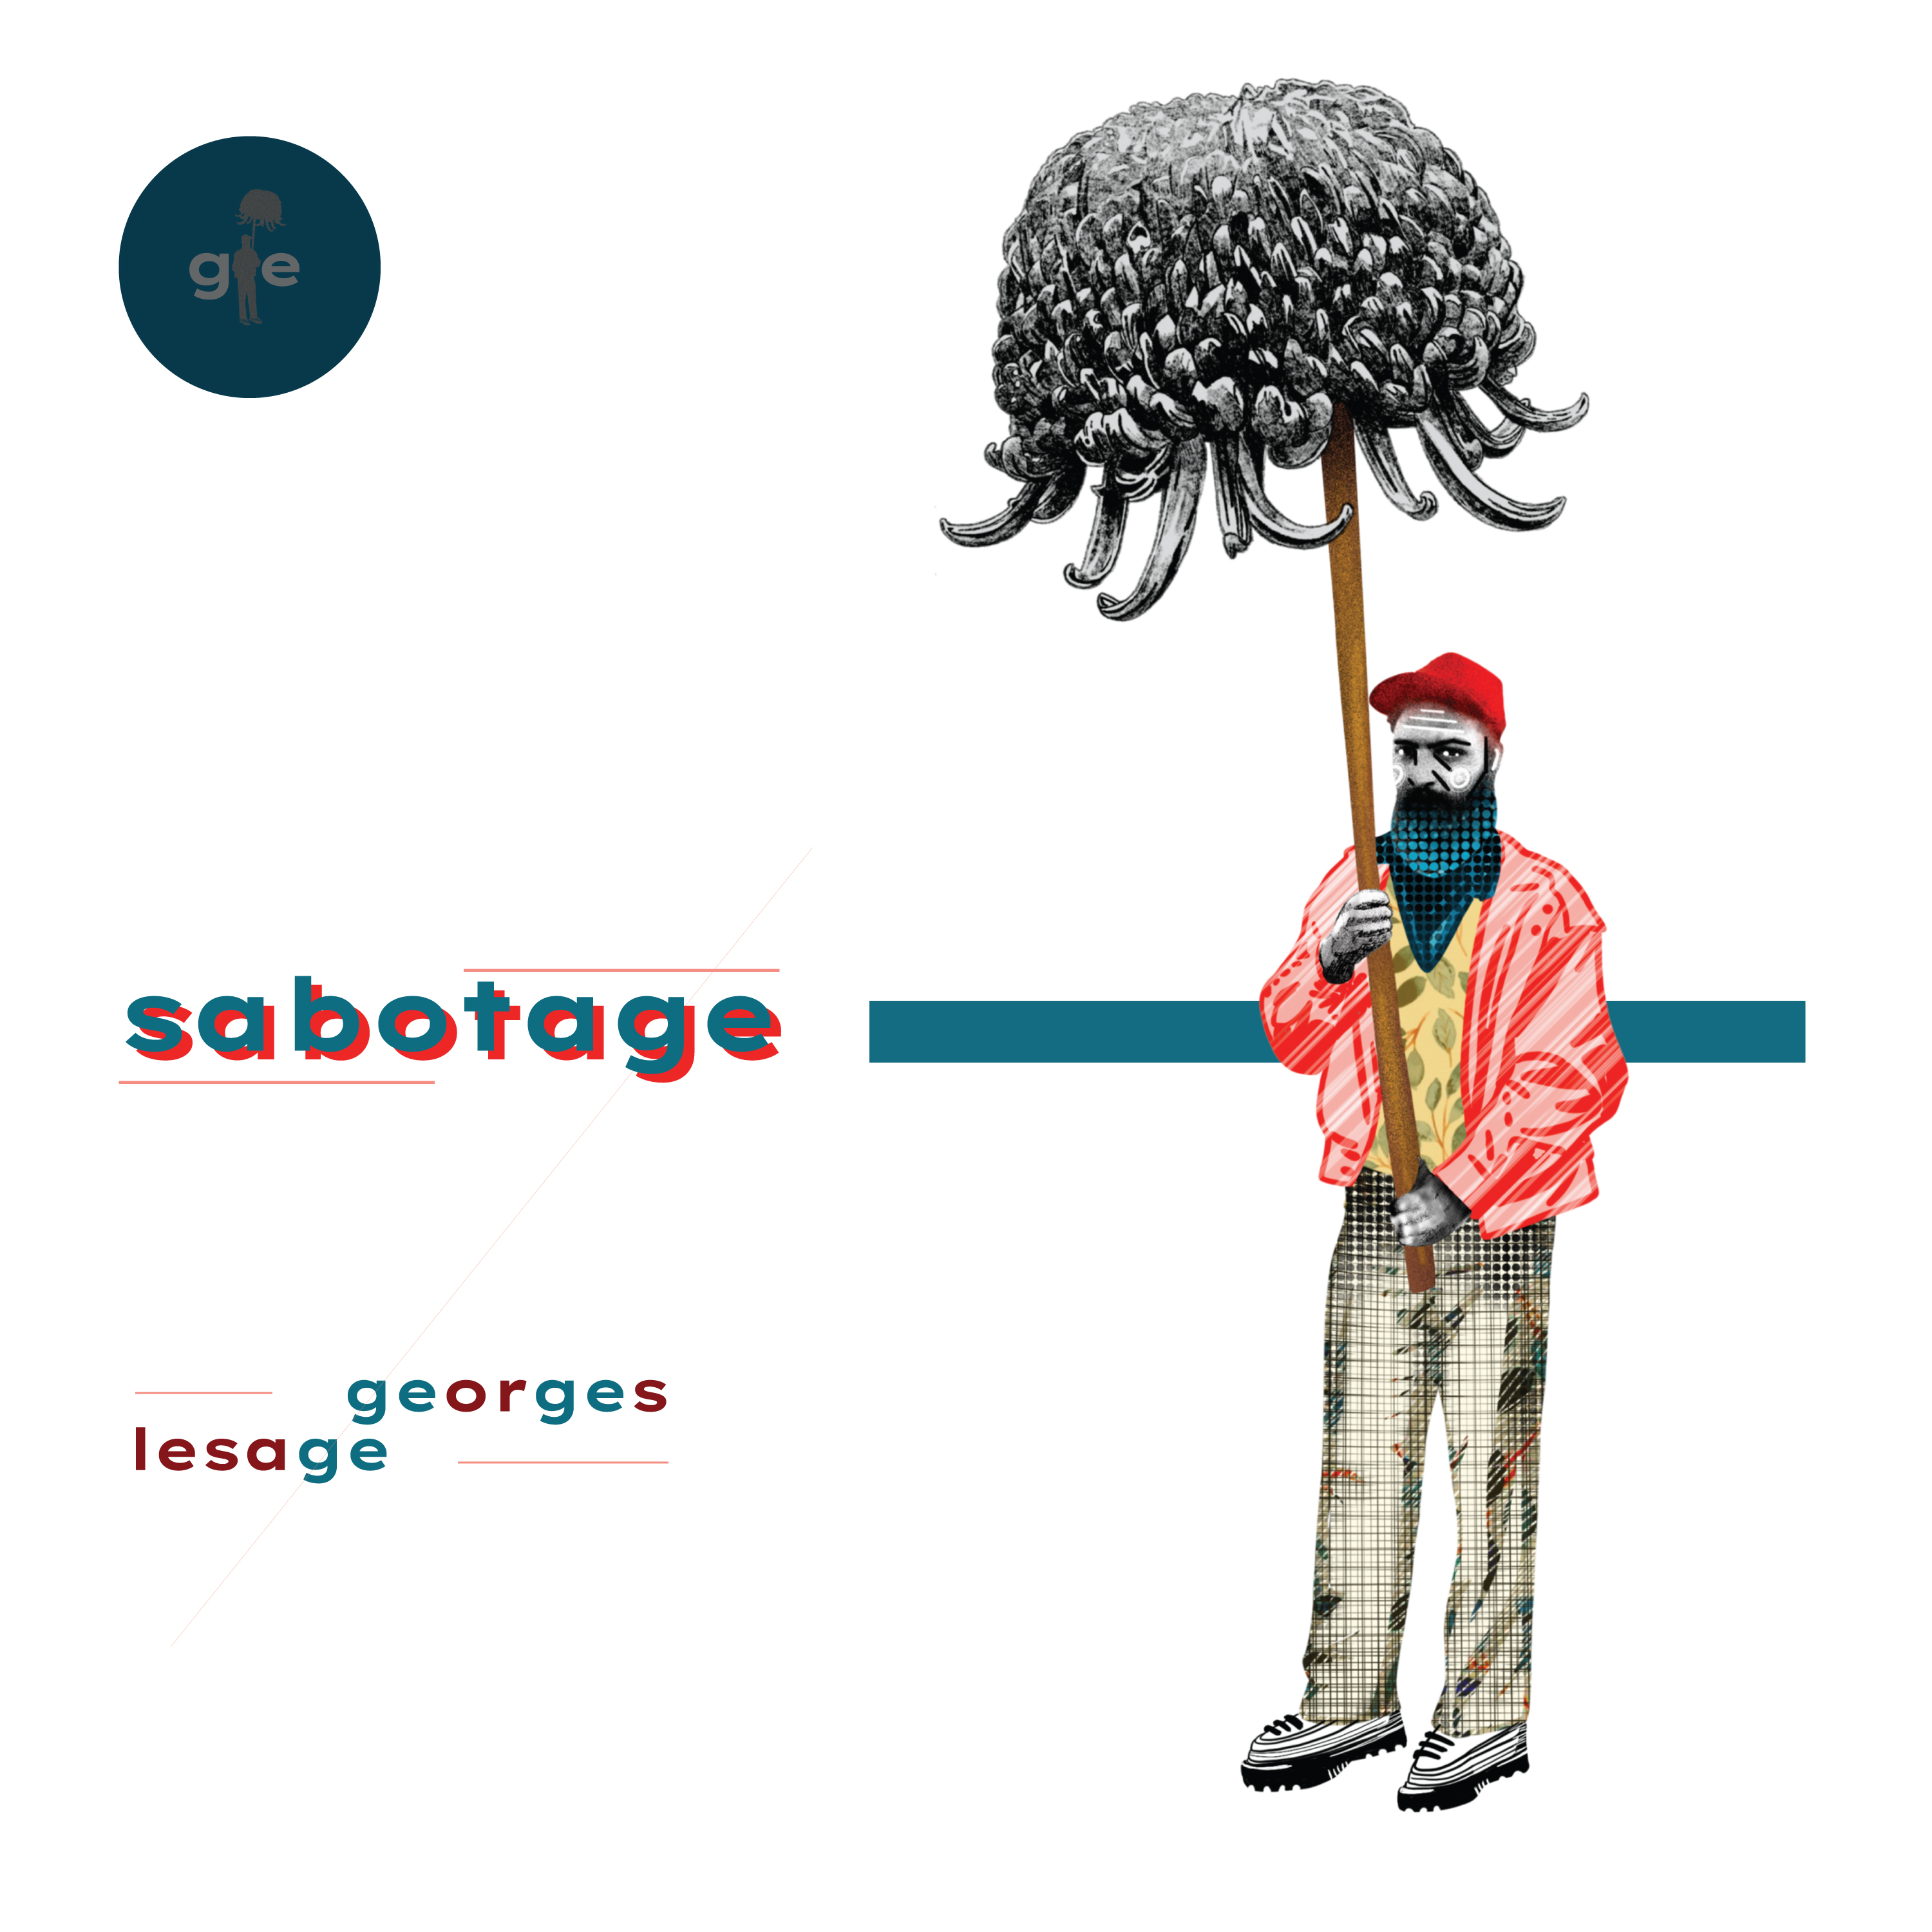 Georges Lesage – Sabotage